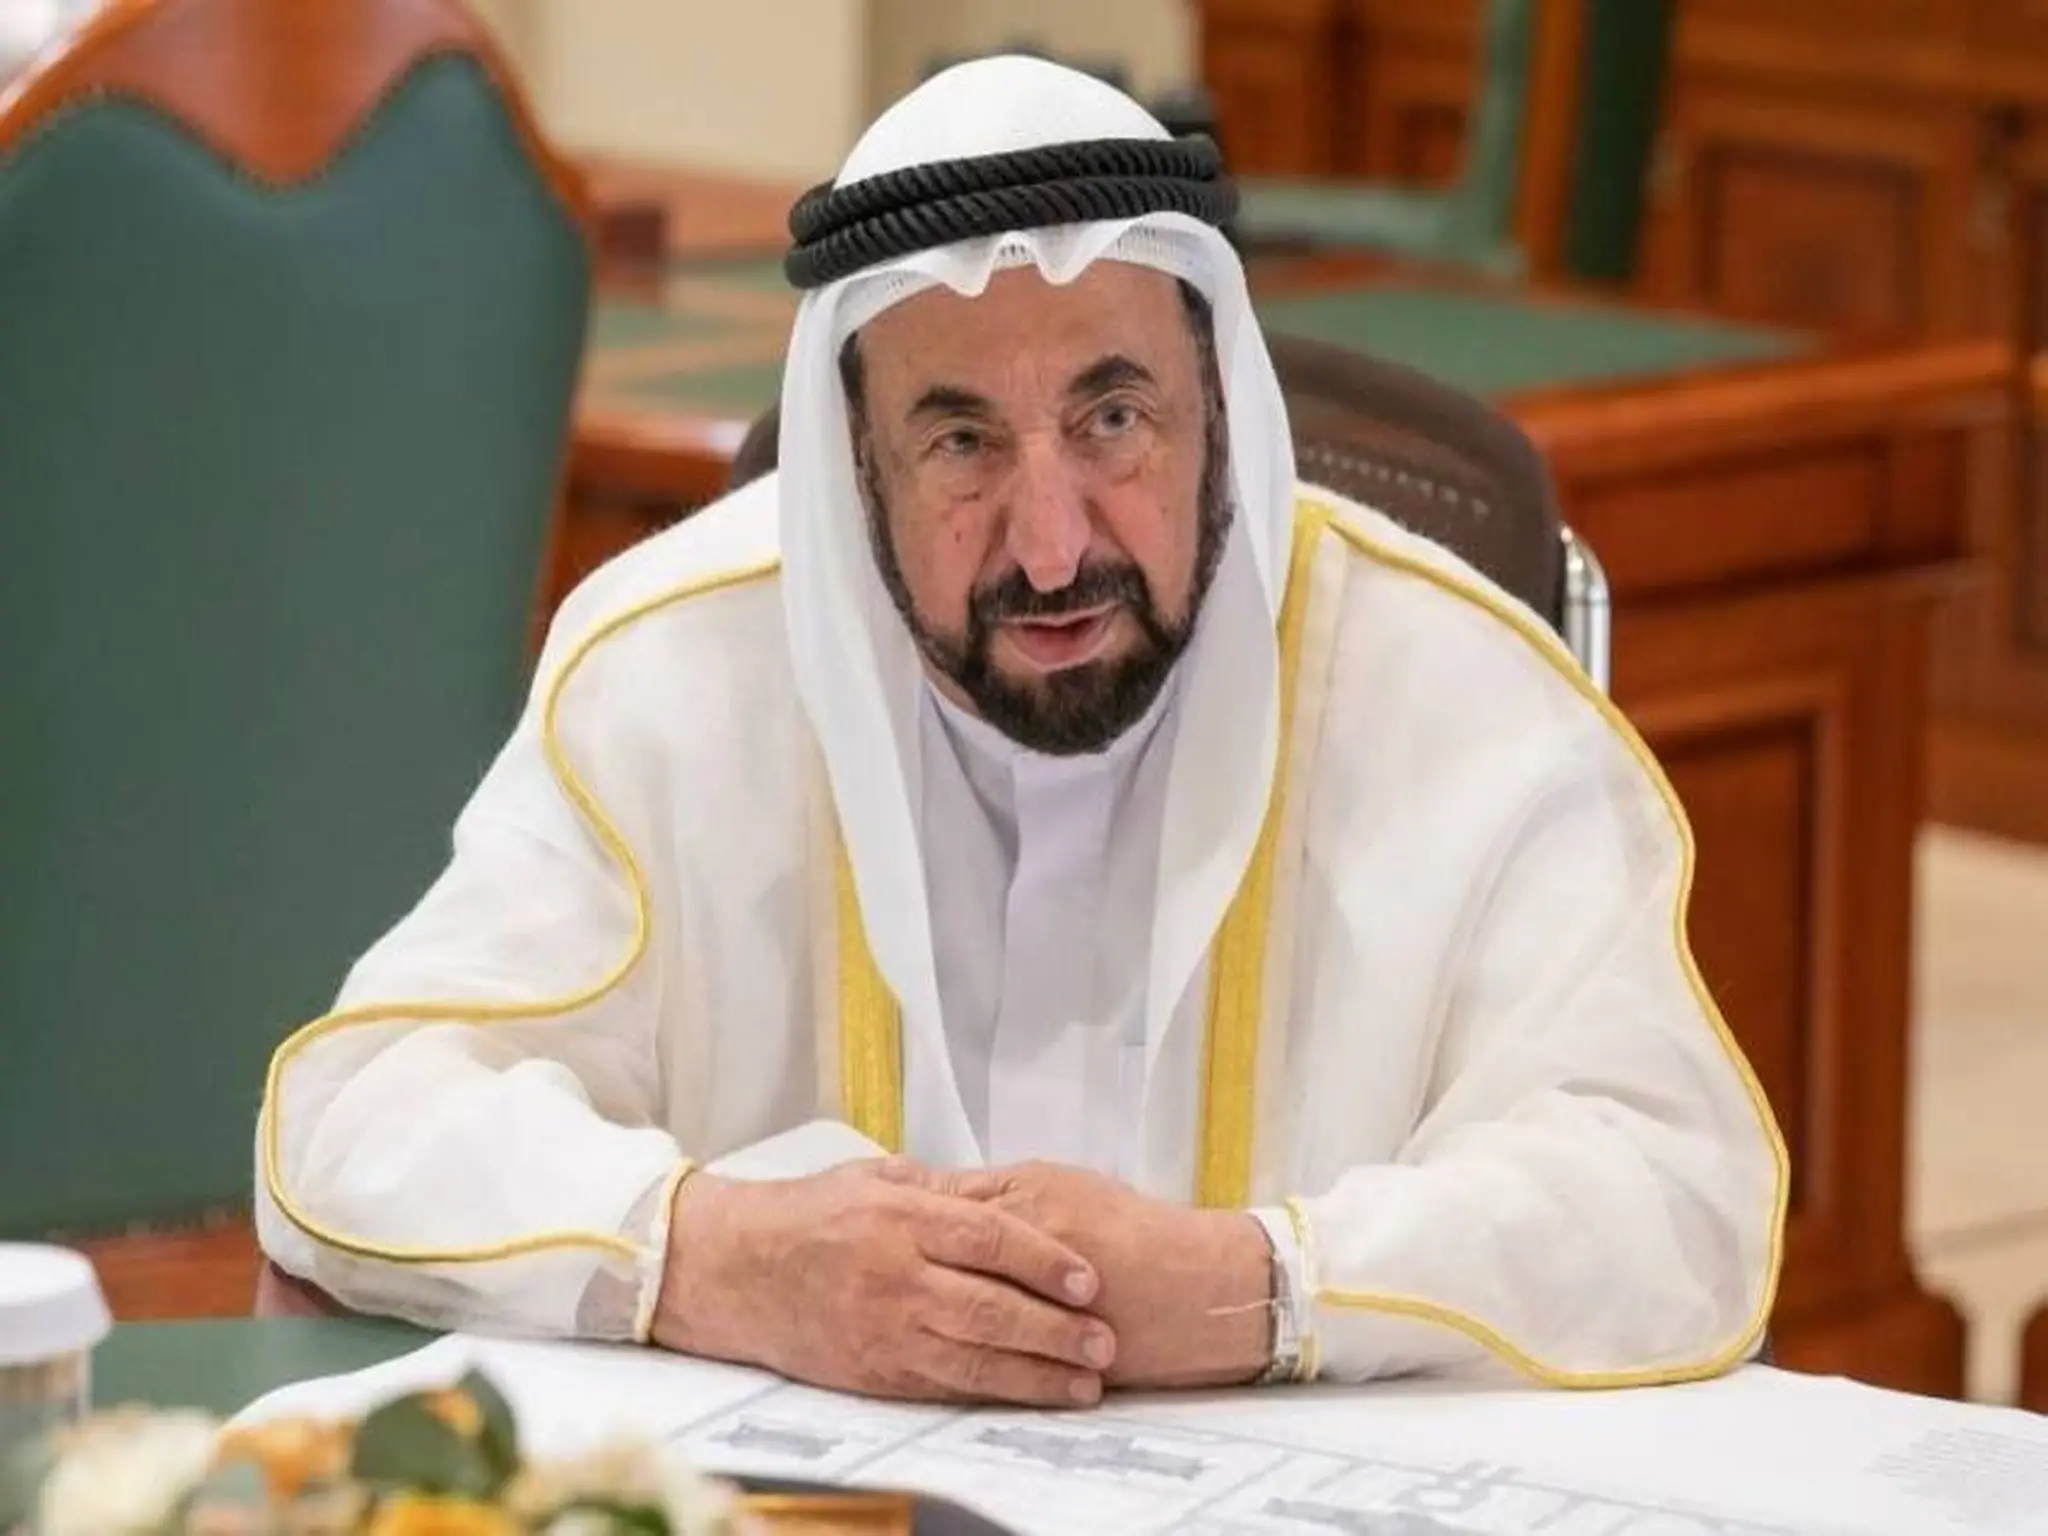 Ruler of Sharjah announces salary hike to 17,500 dirhams